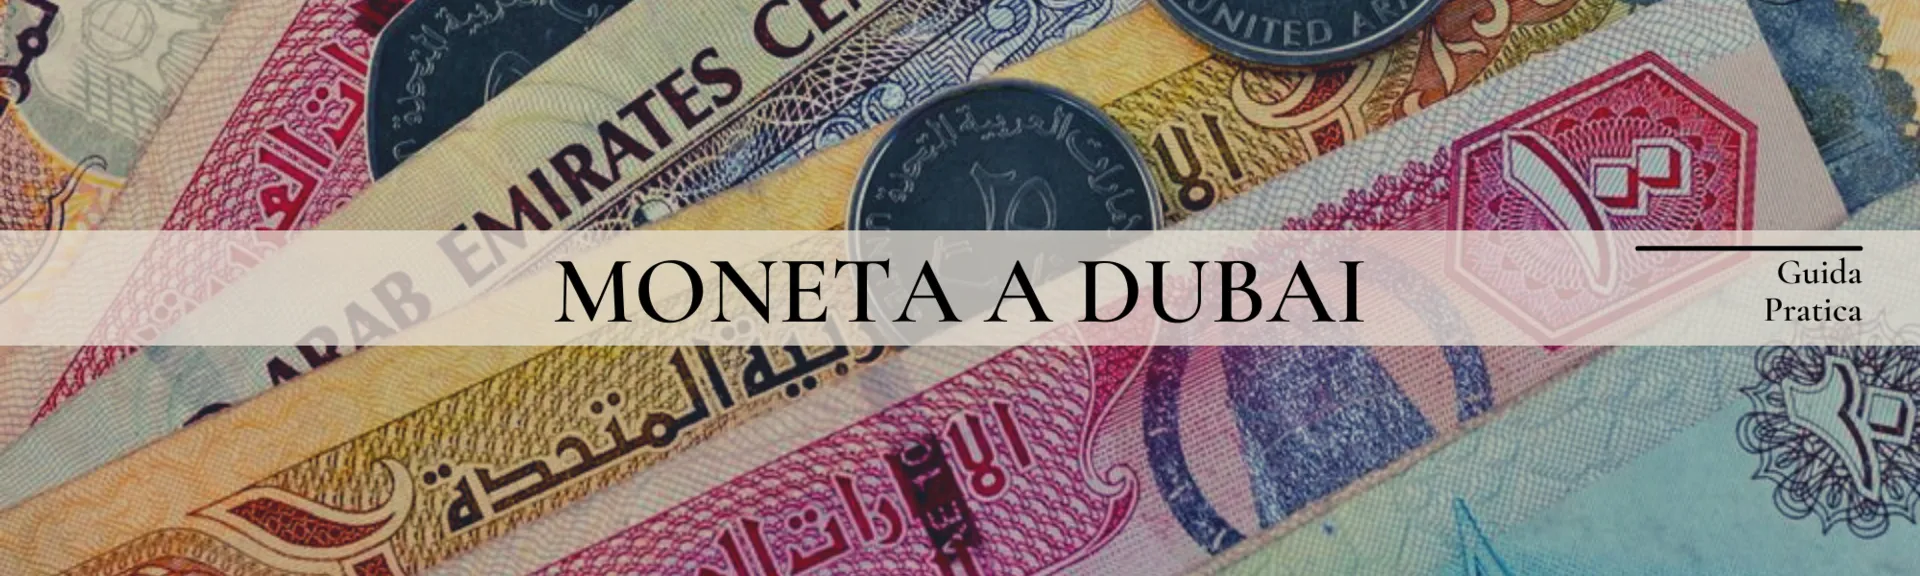 Moneta a Dubai.